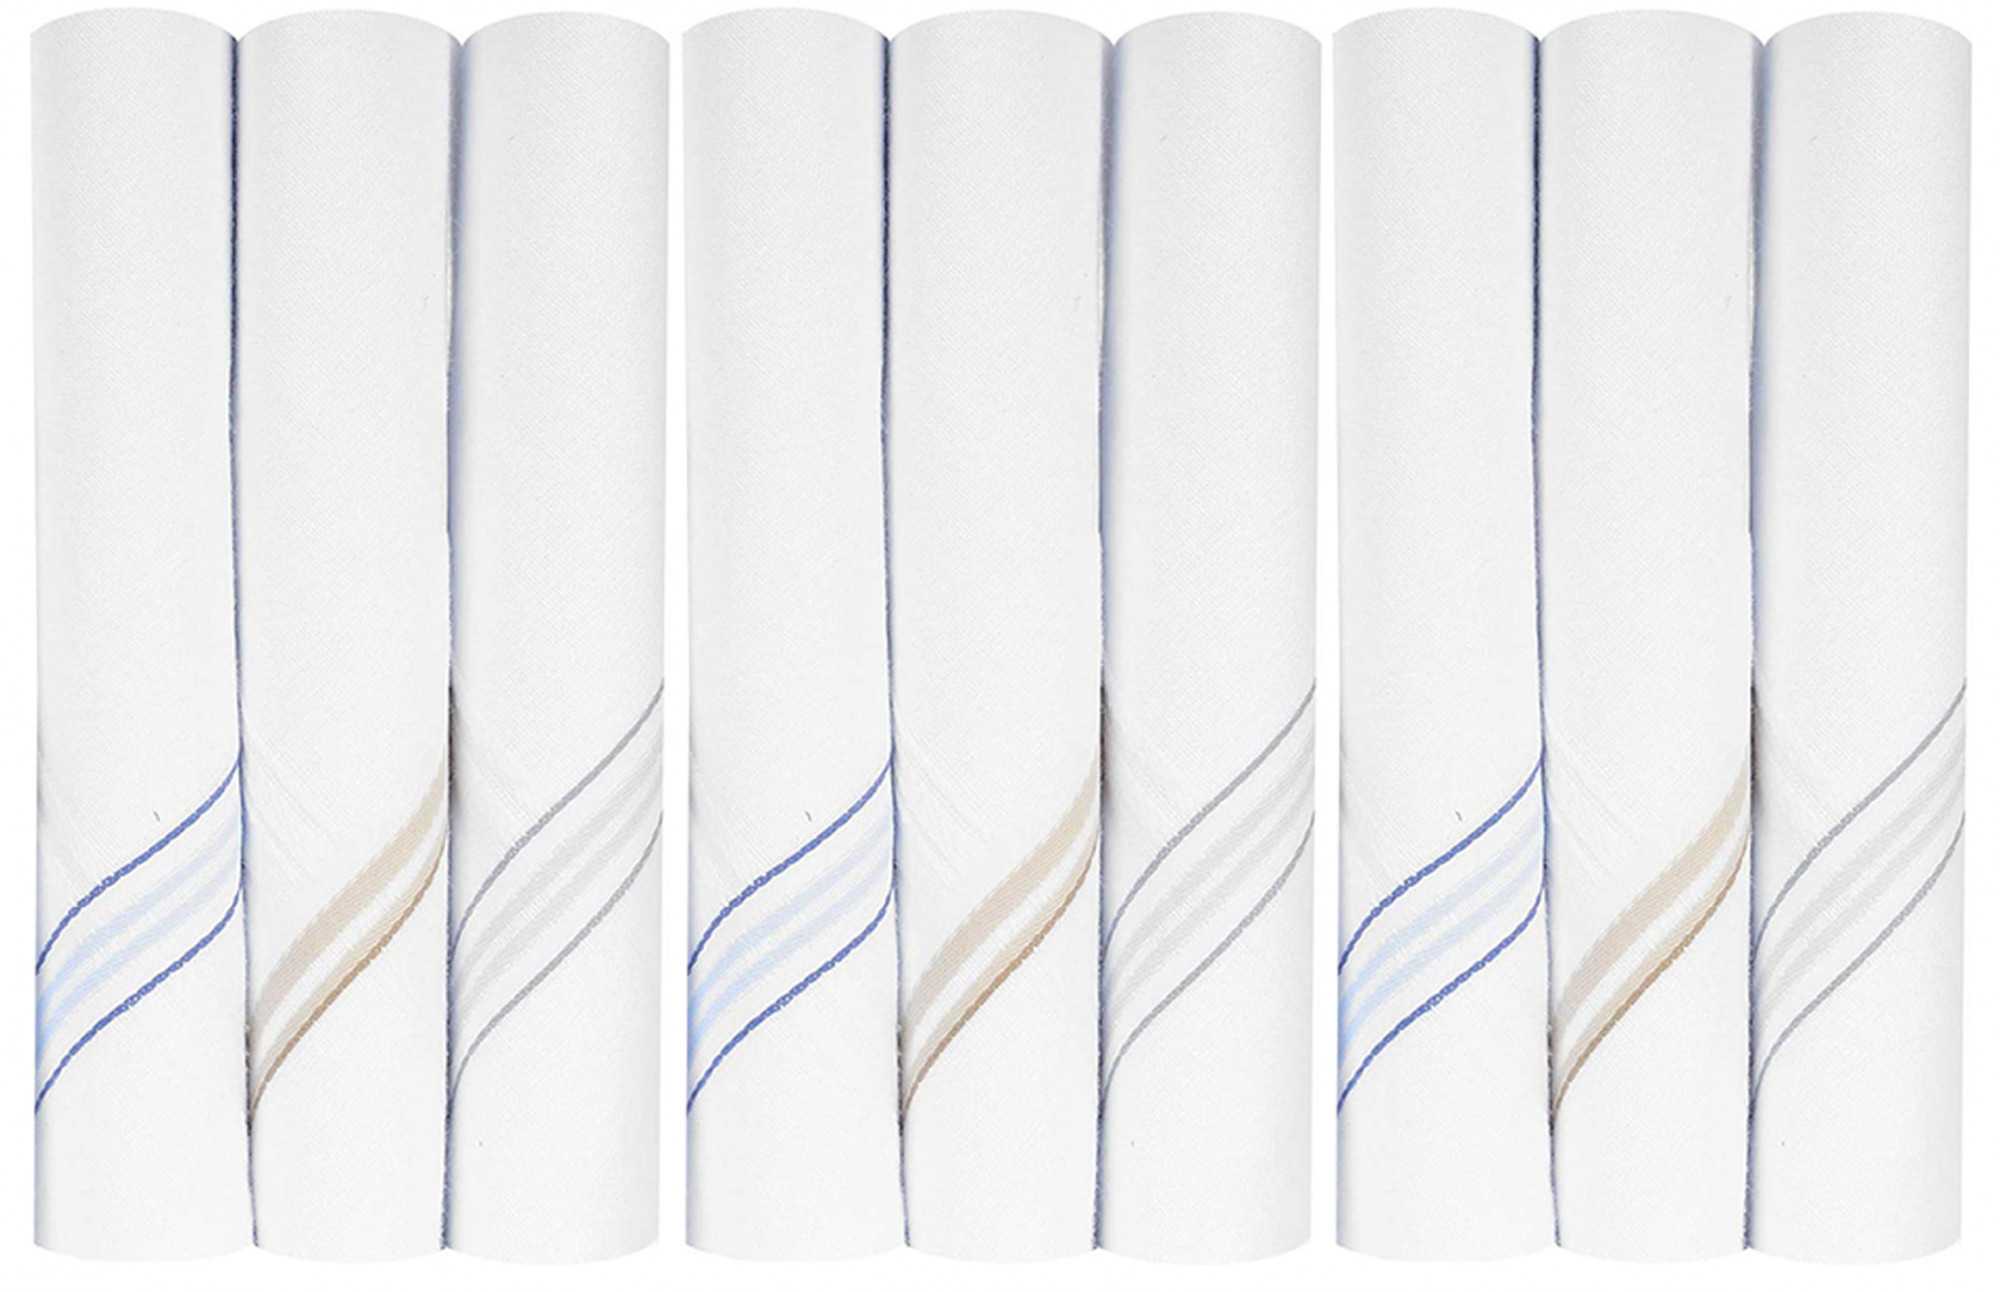 Kuber Industries Lining Design 100% Cotton Premium Collection HAndkerchiefs Hanky For Men,(White)